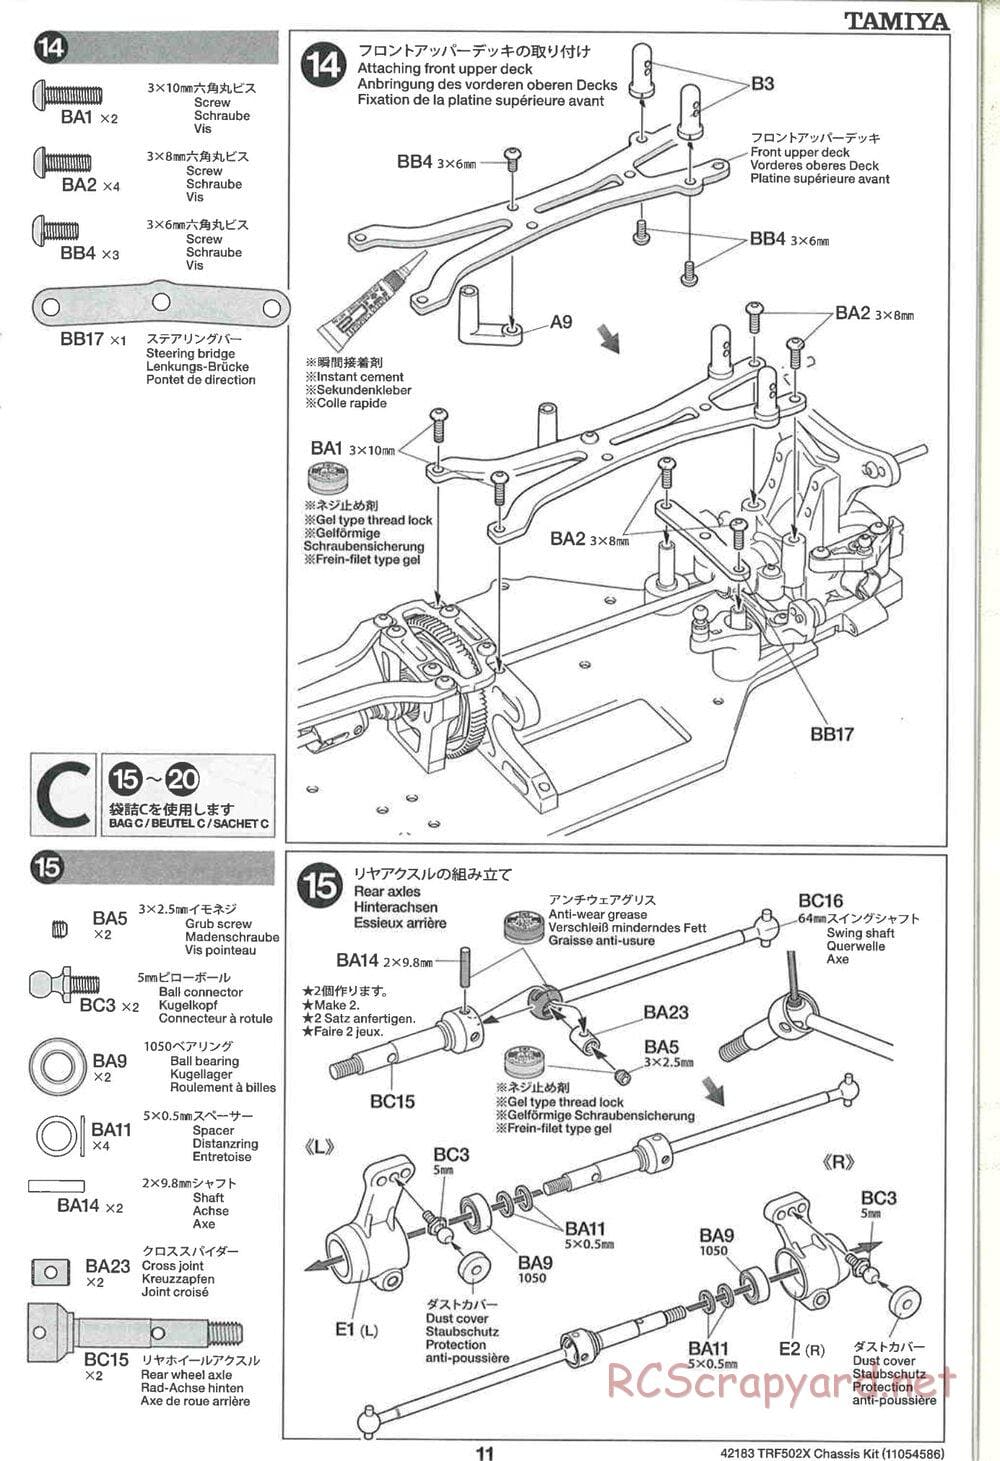 Tamiya - TRF502X Chassis - Manual - Page 11